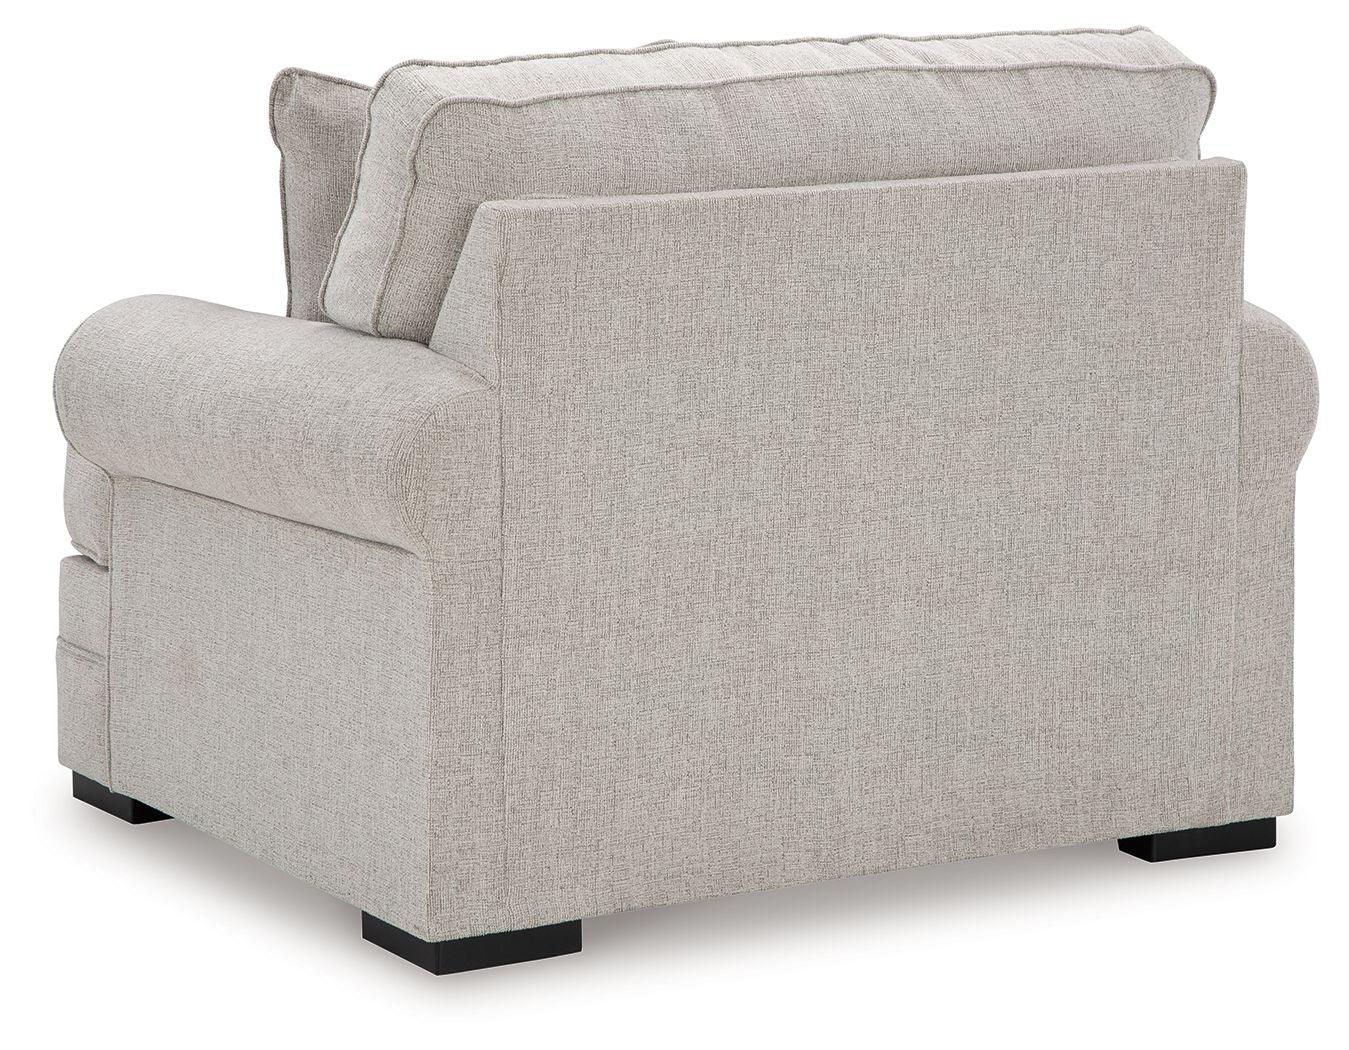 Benchcraft® - Eastonbridge - Living Room Set - 5th Avenue Furniture